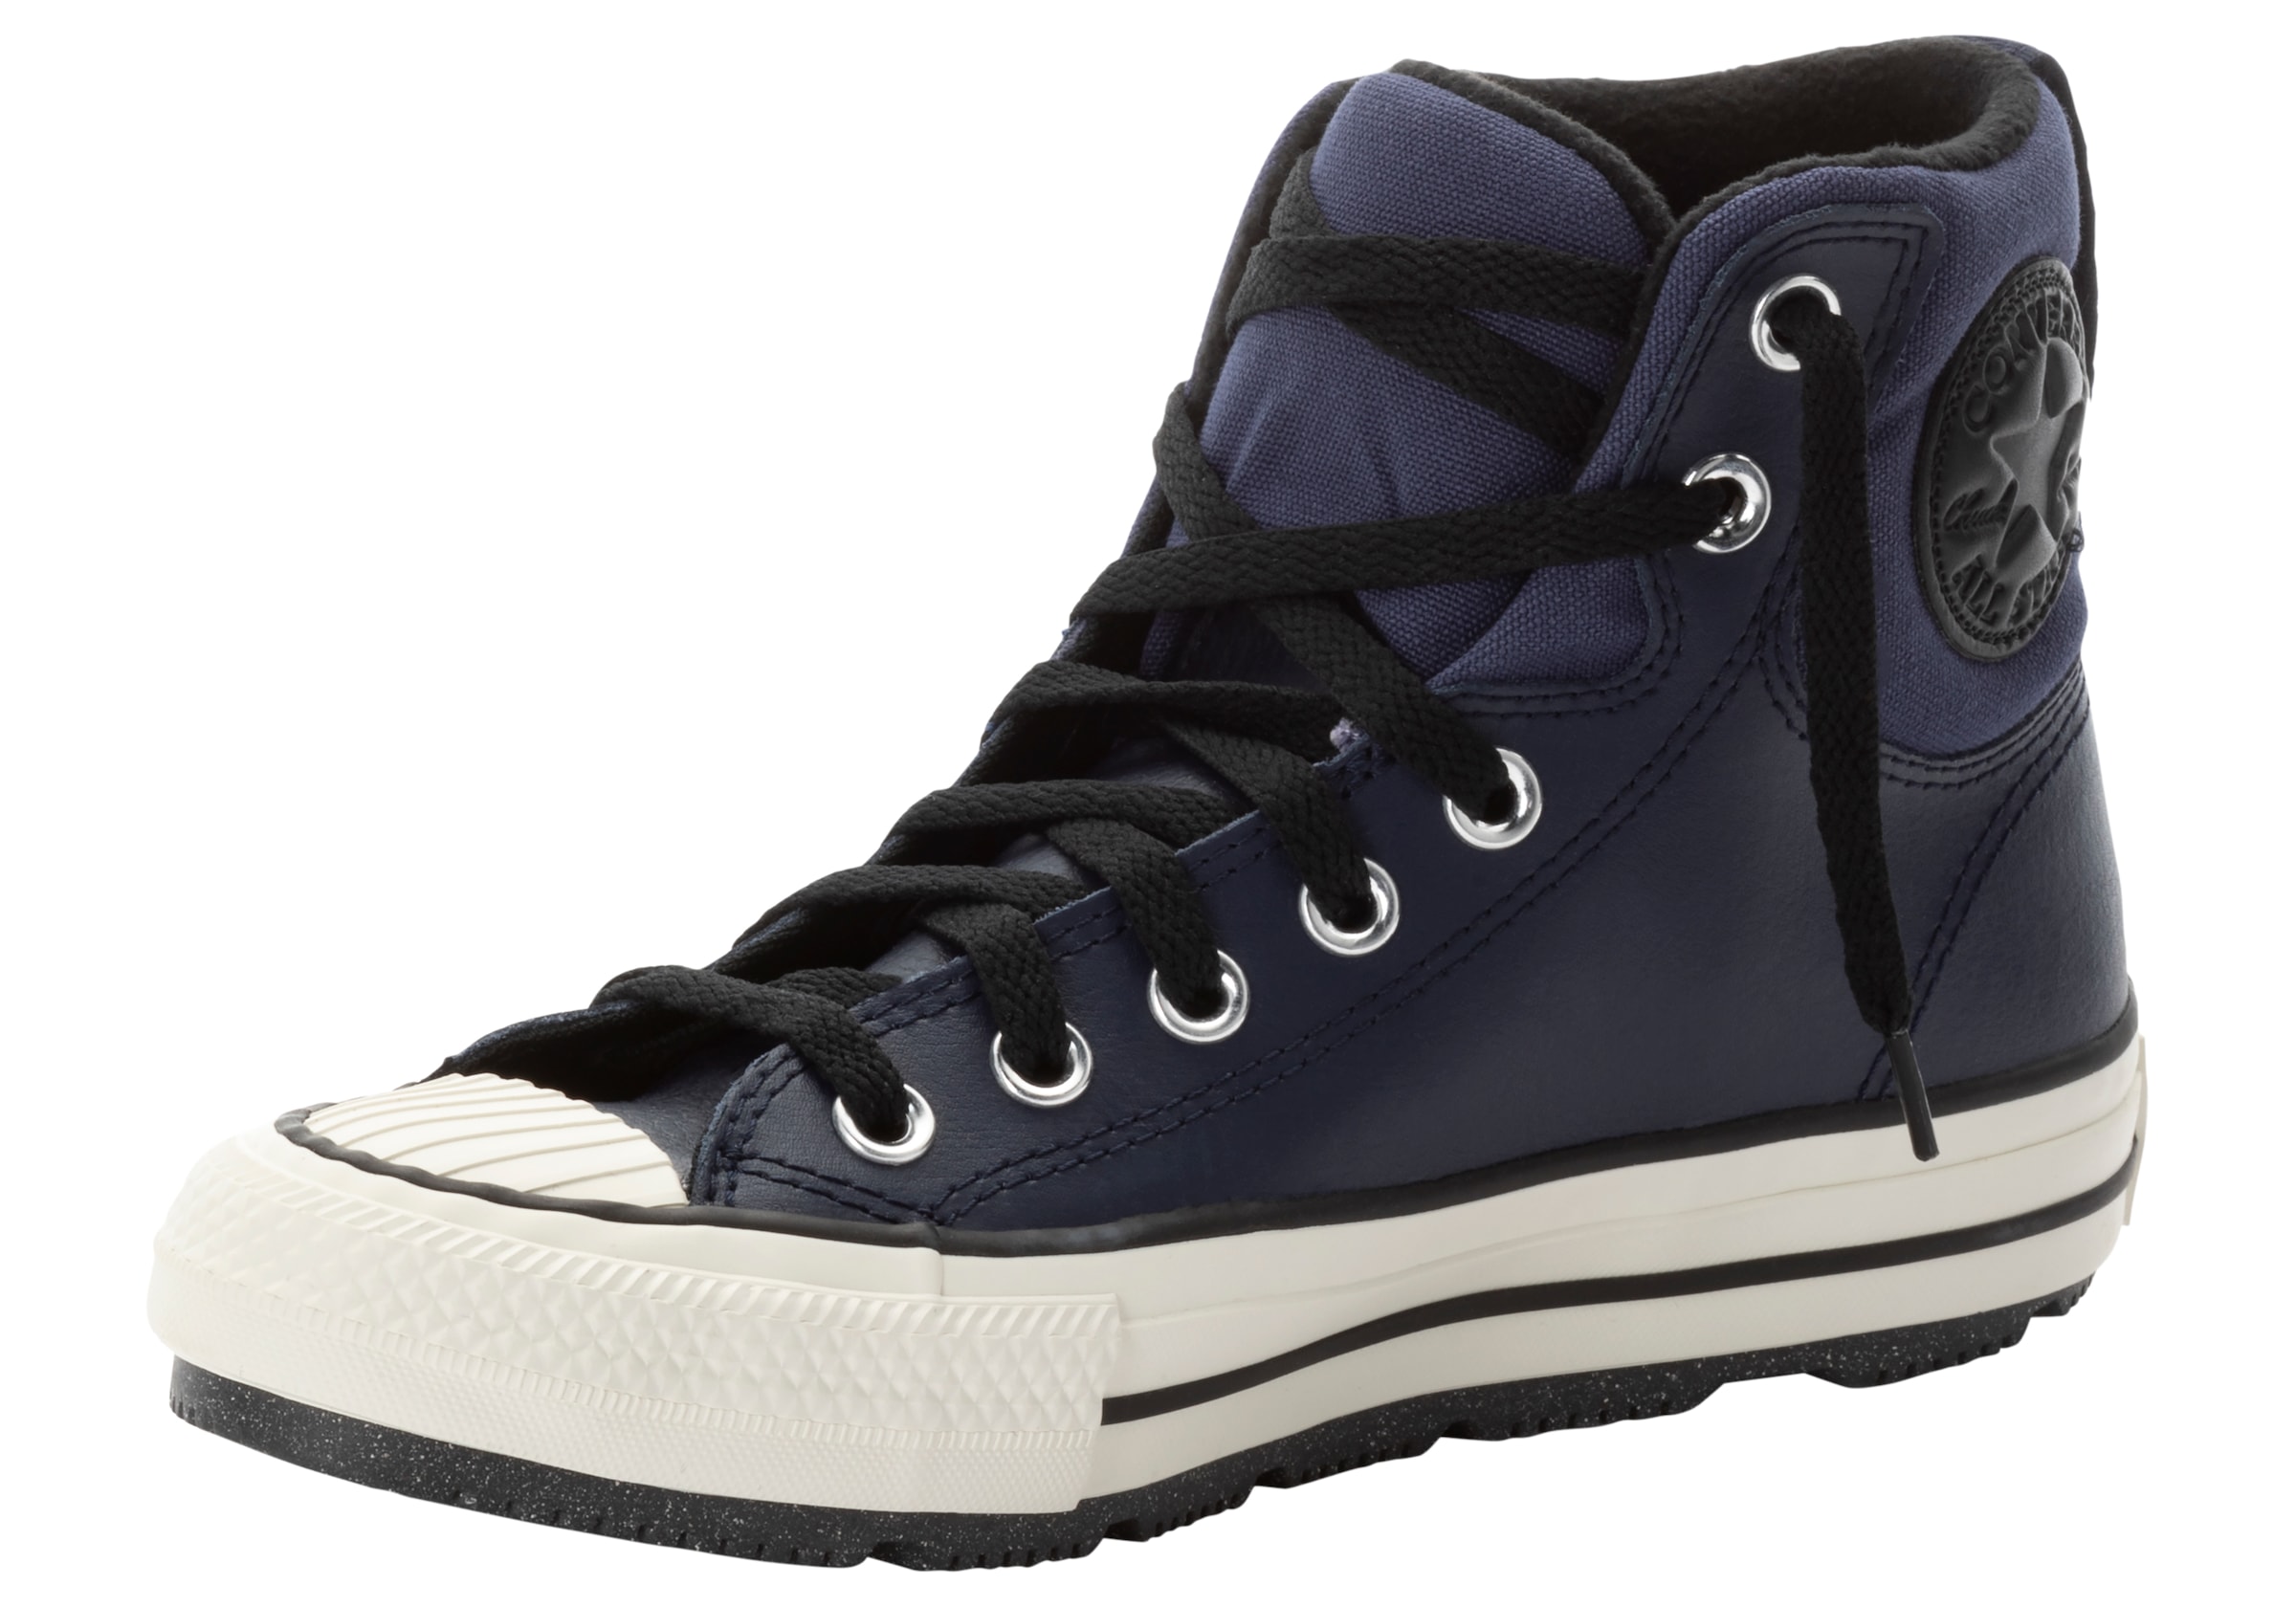 Converse Sneakerboots »CHUCK TAYLOR ALL STAR BERKSHIRE«, Warmfutter